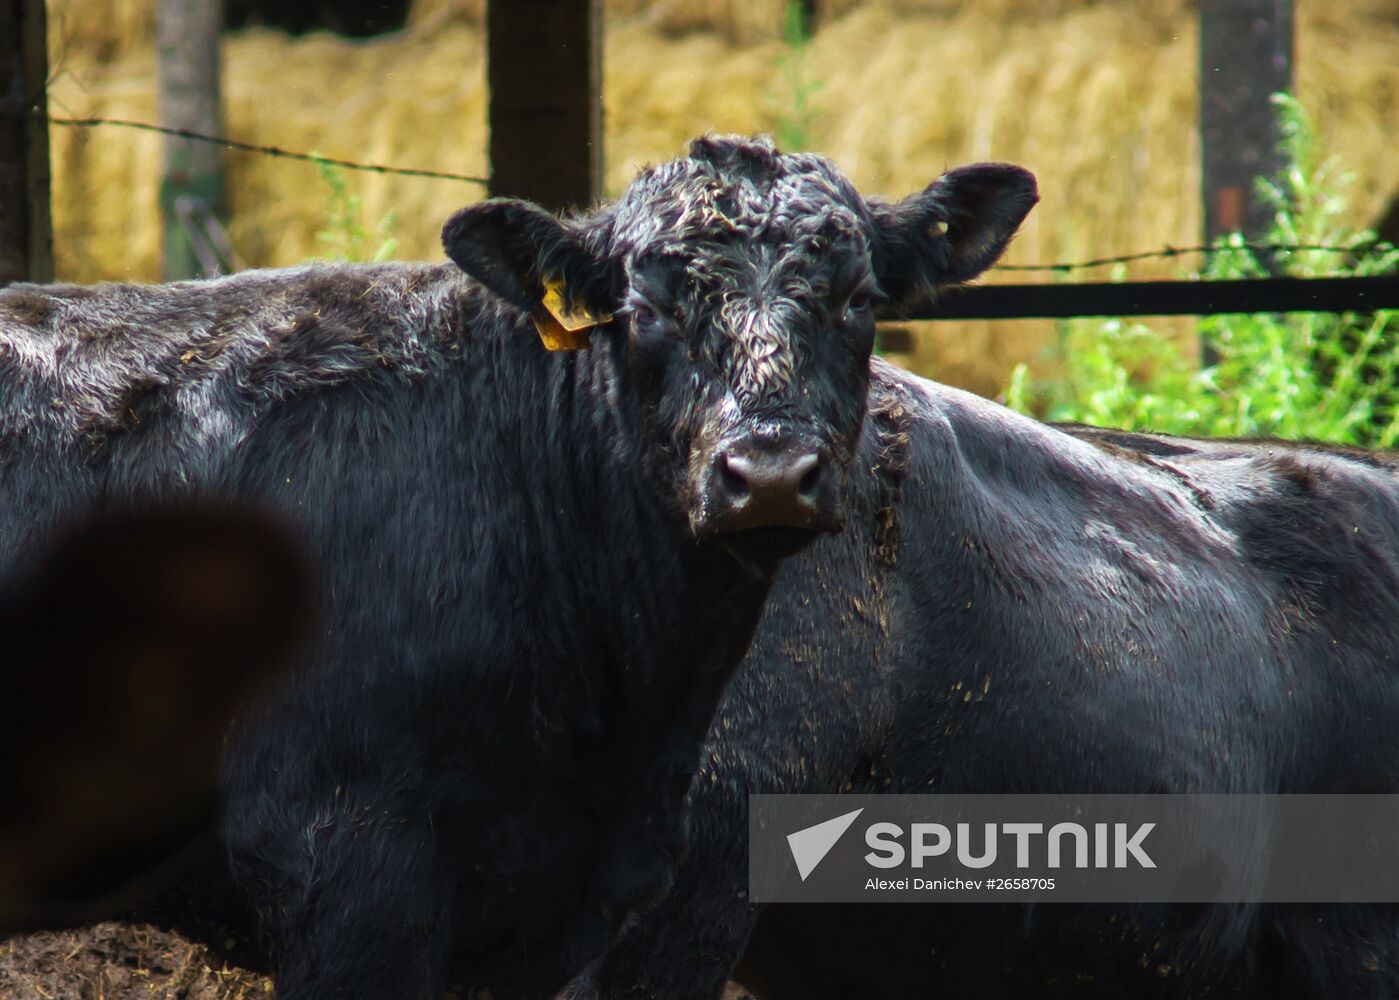 Beef cows farming in Leningrad Region